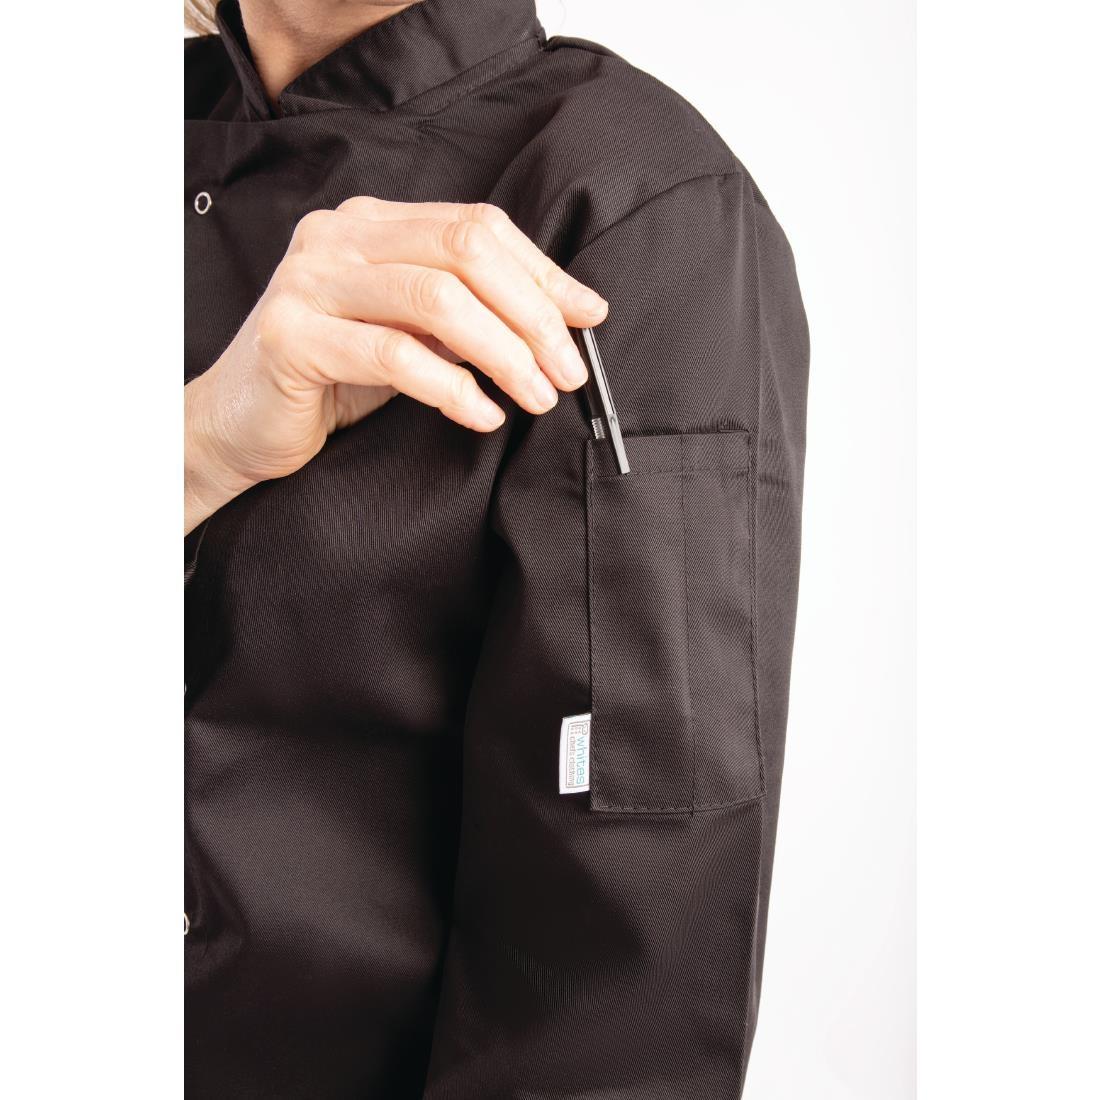 Whites Vegas Unisex Chefs Jacket Long Sleeve Black L - A438-L  - 12